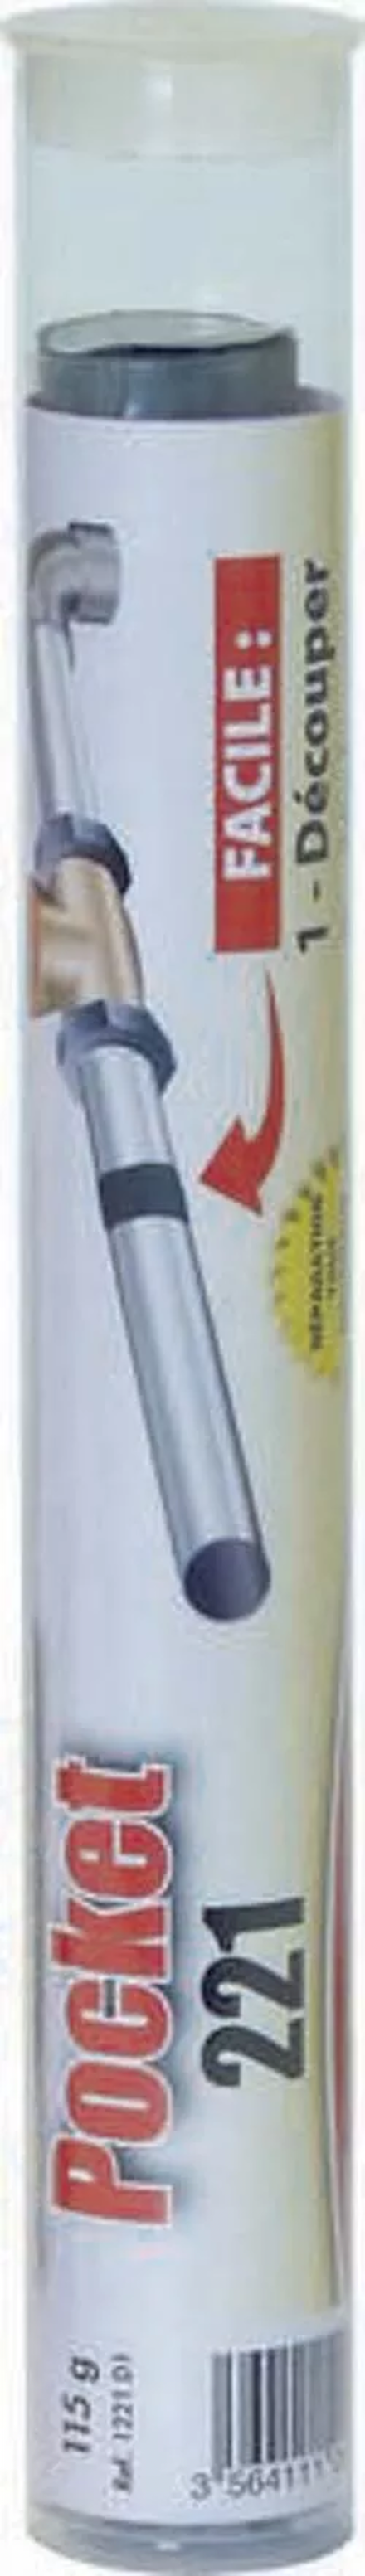 Mastic pour metaux tube 125gr orapi - 11992